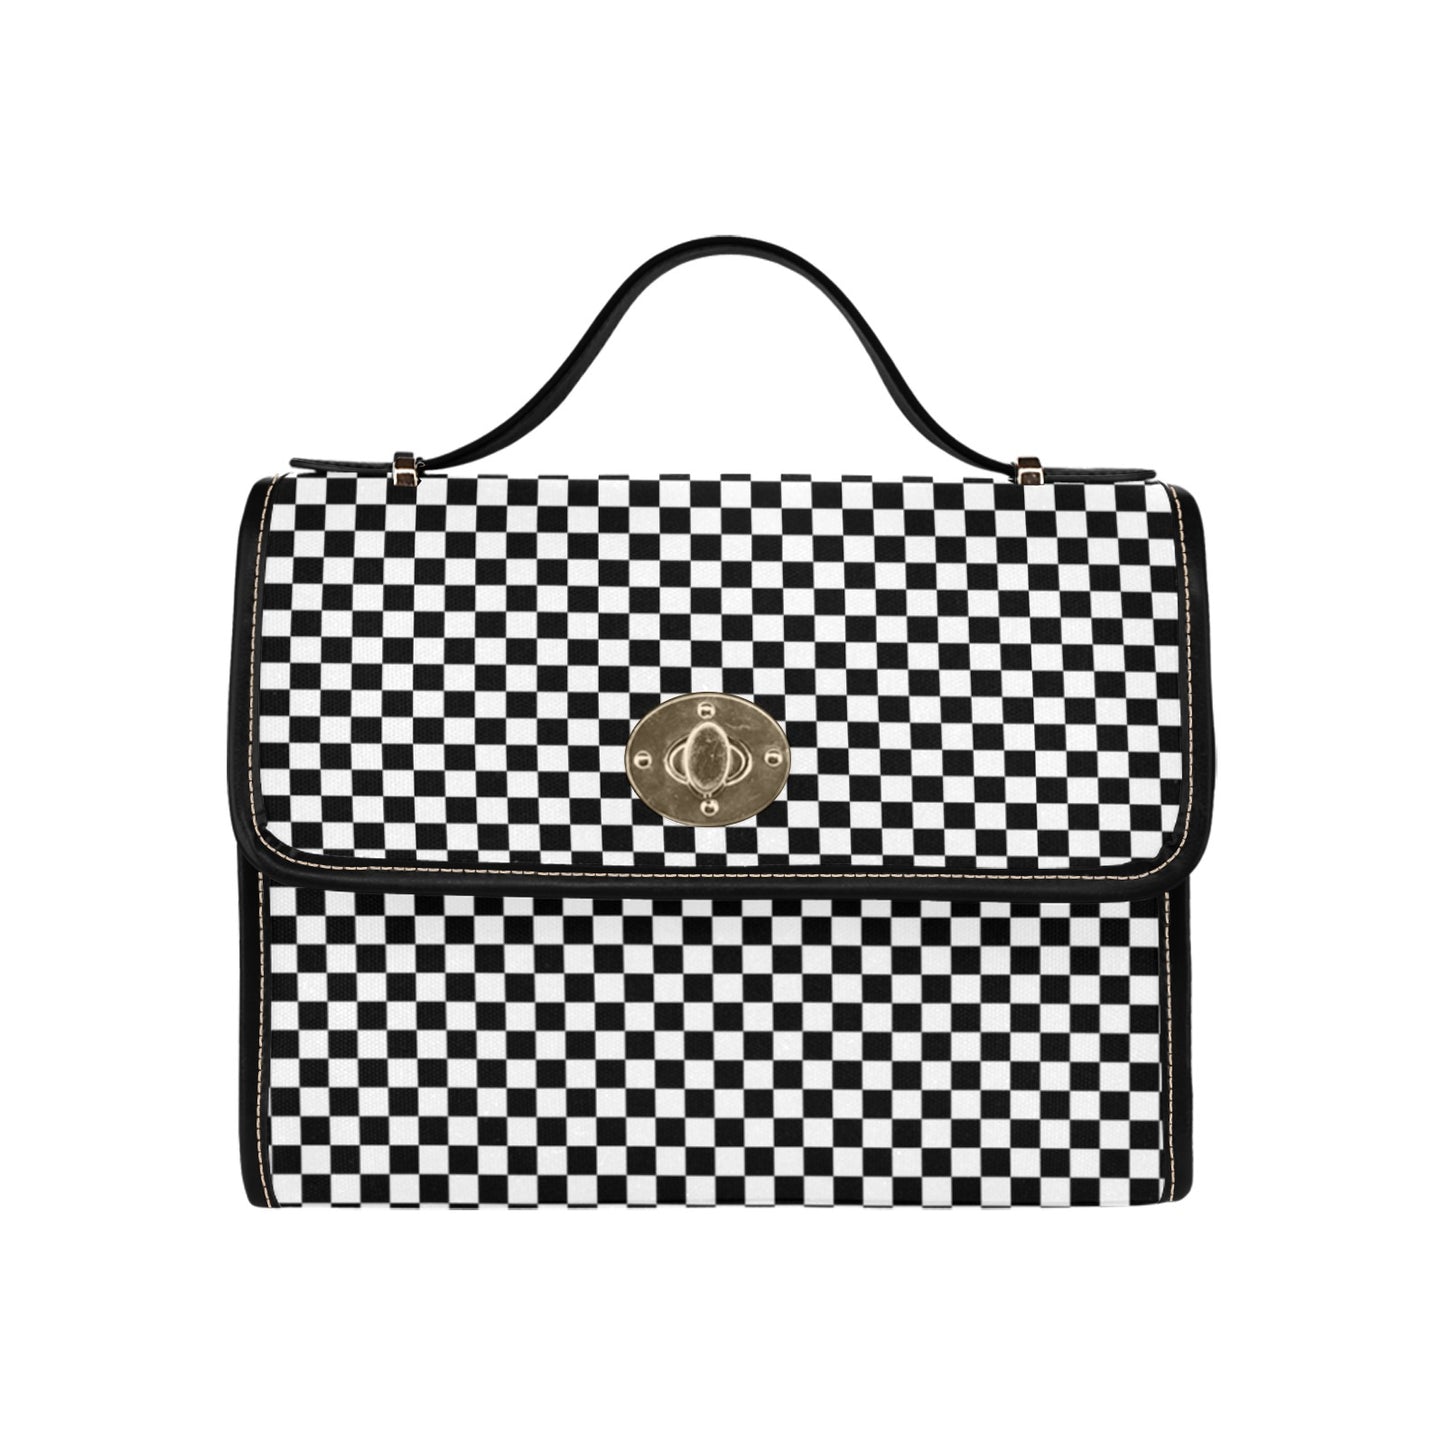 Checkered Satchel Purse bag, Black White Check Checkerboard Small Waterproof Cute Women Crossed Body Vegan Leather Strap Handbag